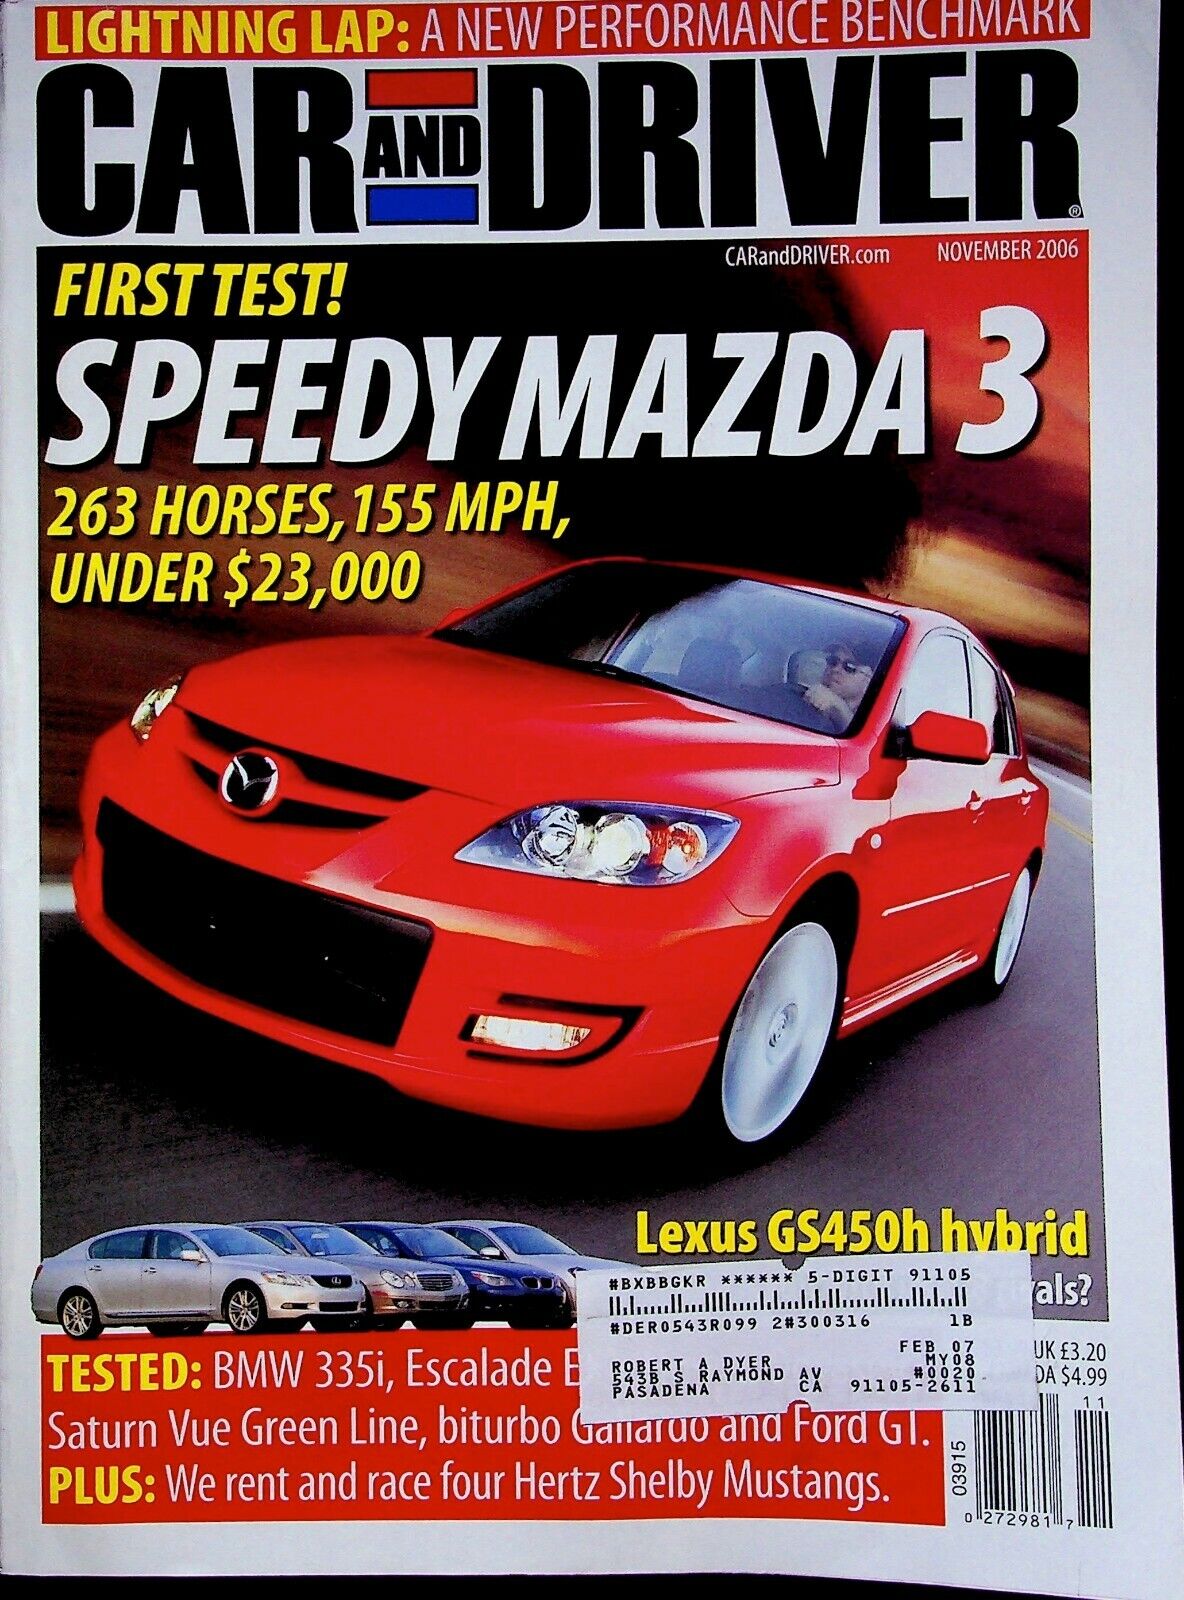 SPEEDY MAZDA 3 - CAR AND DRIVER MAGAZINE, NOVEMBER VOLUME 52, NUMBER 5, 2006